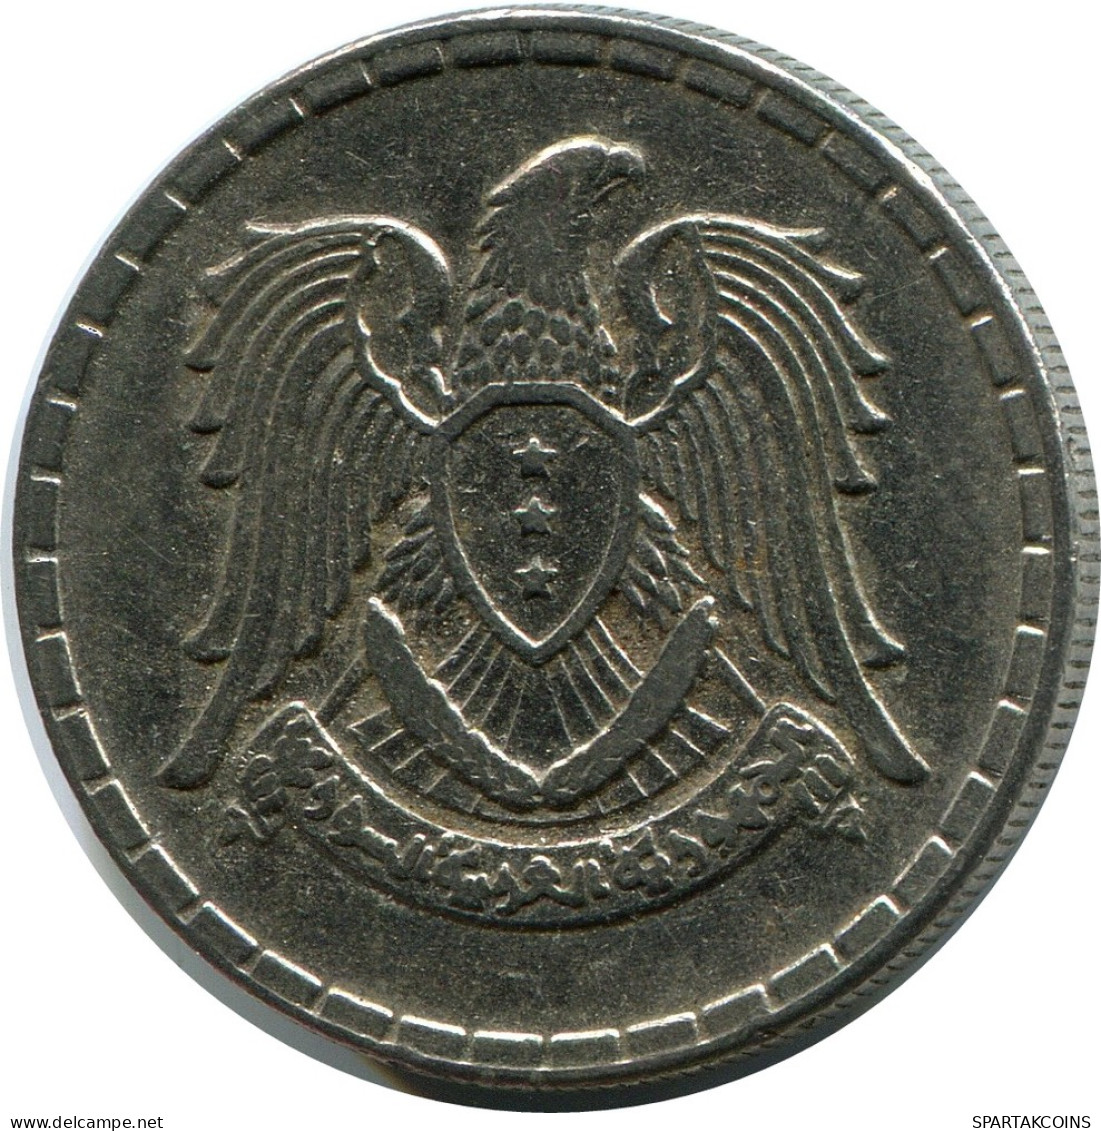 50 QIRSH 1968 SYRIA Islamic Coin #AH607.3.U - Syrien